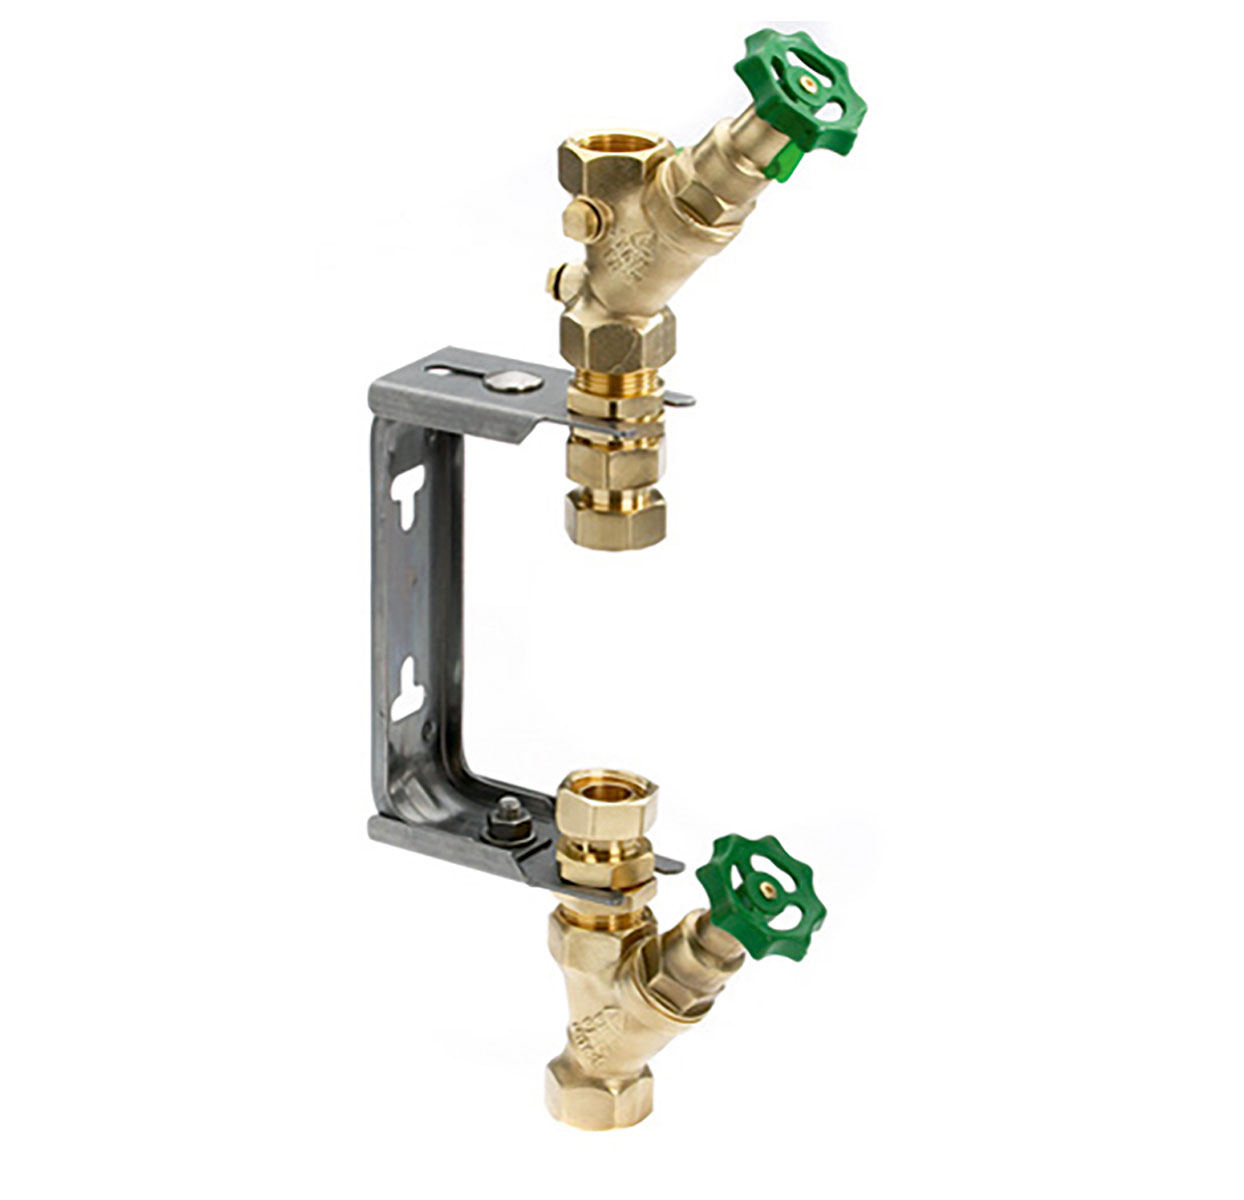 5200250 - Water meter Connection kit bracket adjustable, vertical installation